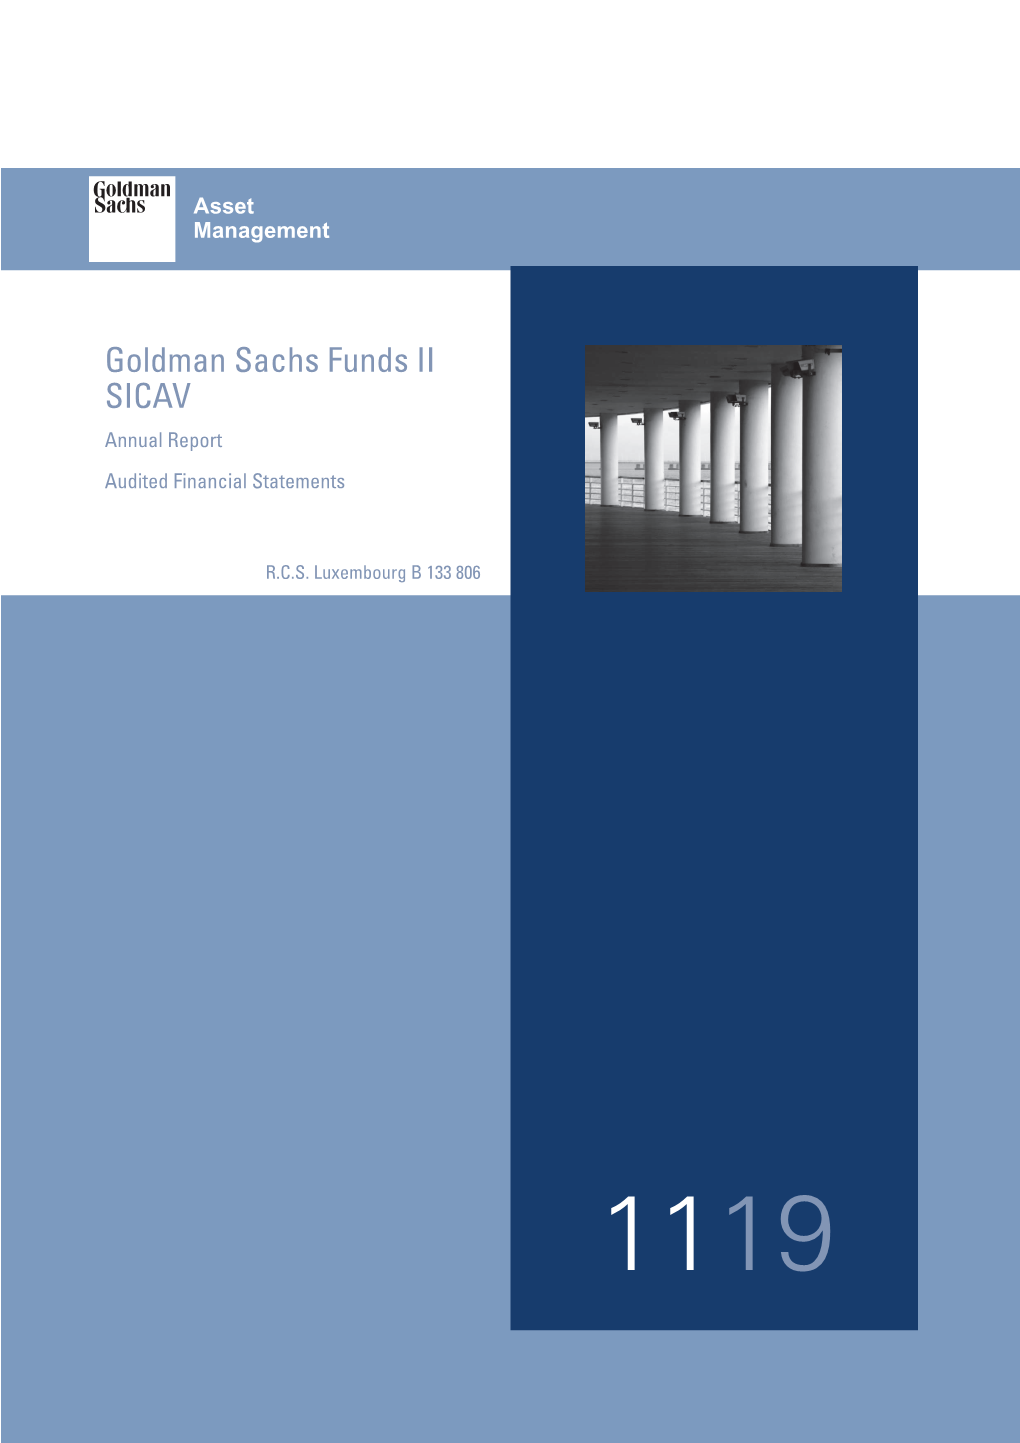 Goldman Sachs Funds II SICAV Annual Report